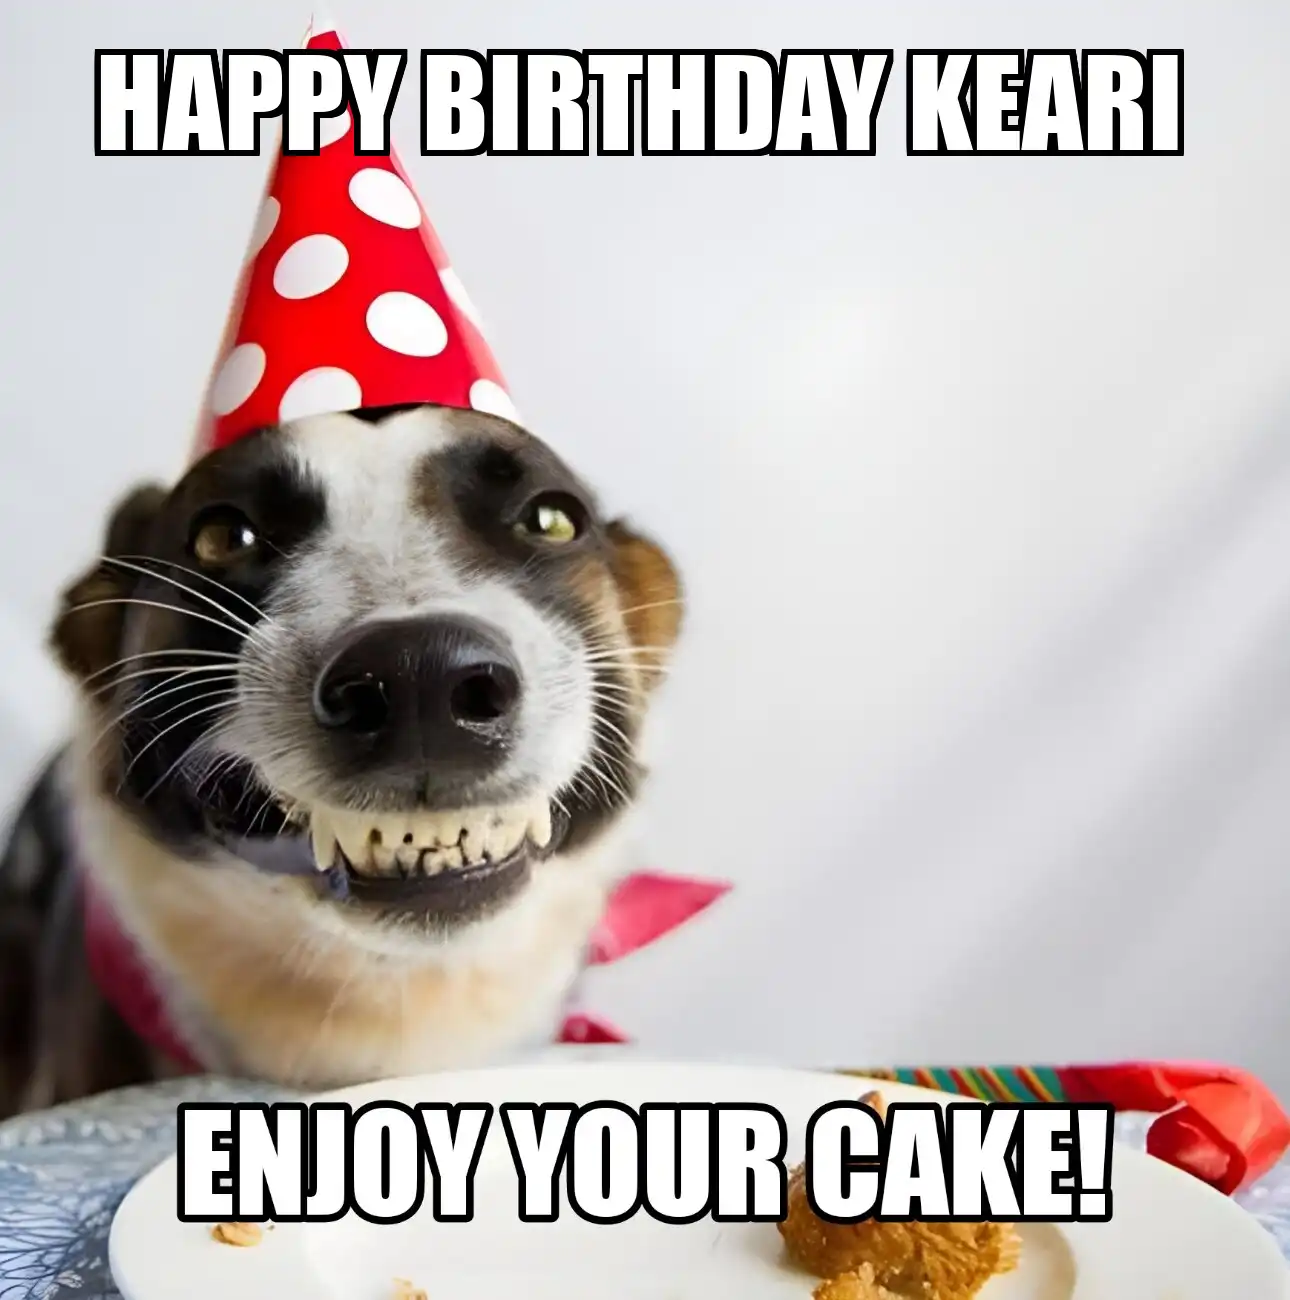 Happy Birthday Keari Enjoy Your Cake Dog Meme